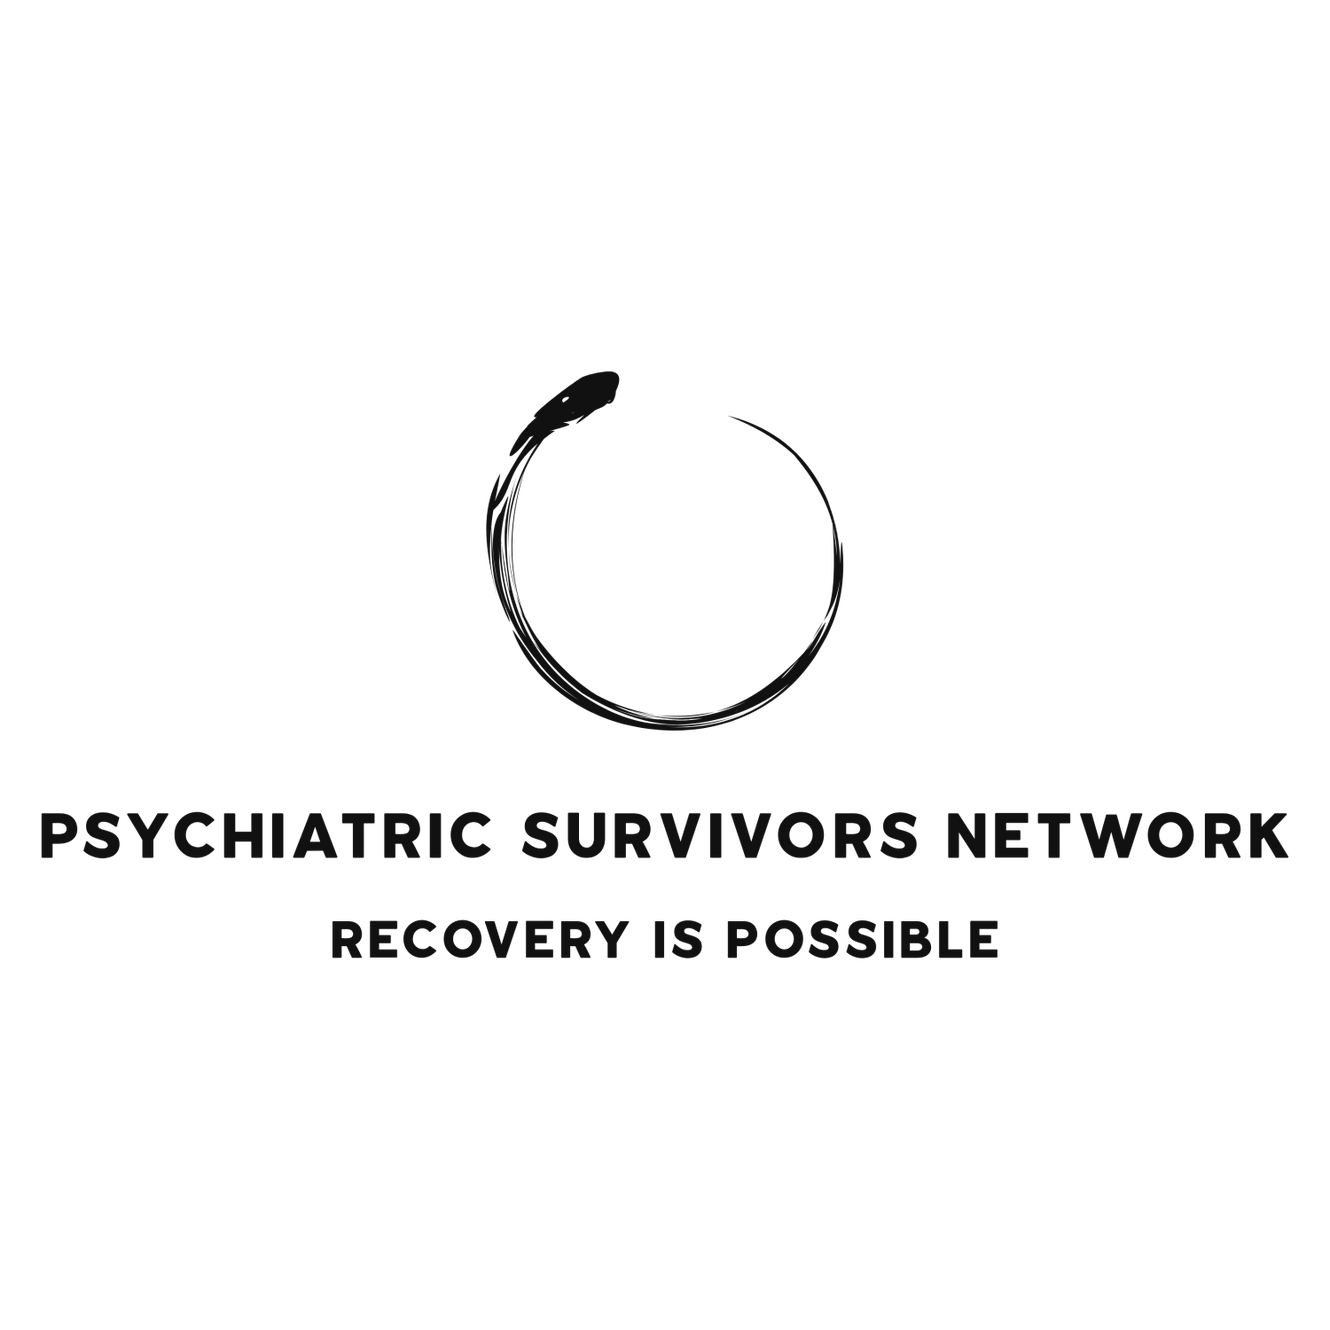 www.psychiatricsurvivors.net